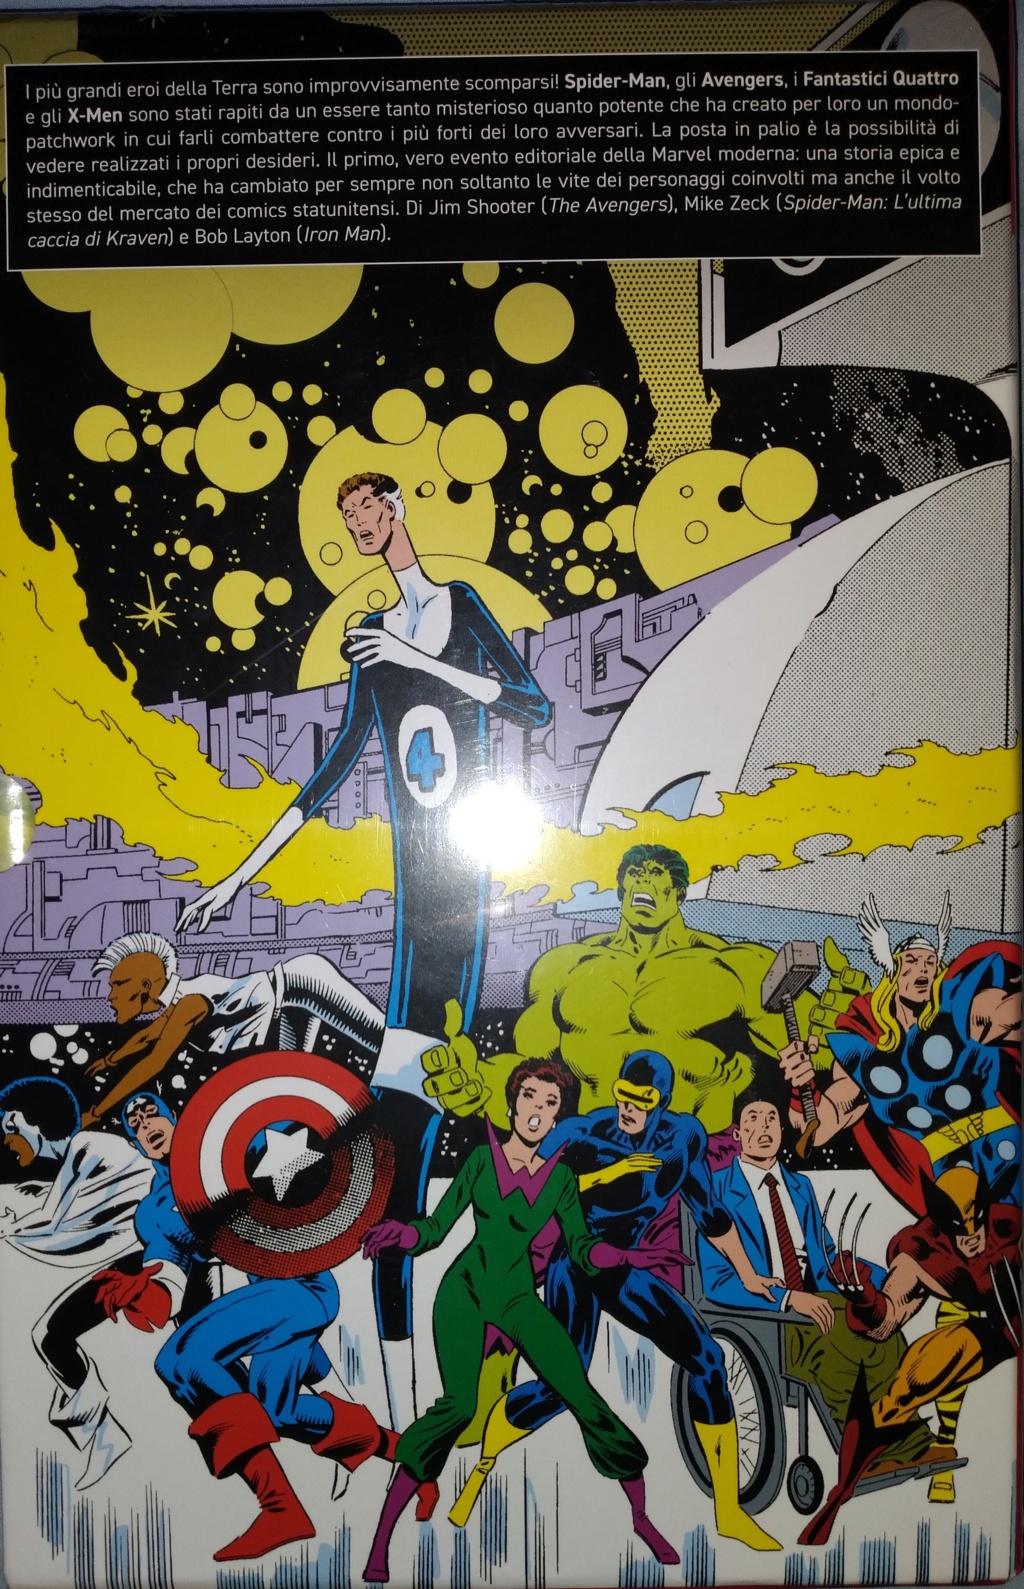 Marvel Super Heroes: "Secret Wars" (collezione di spezialagent) Img_2587